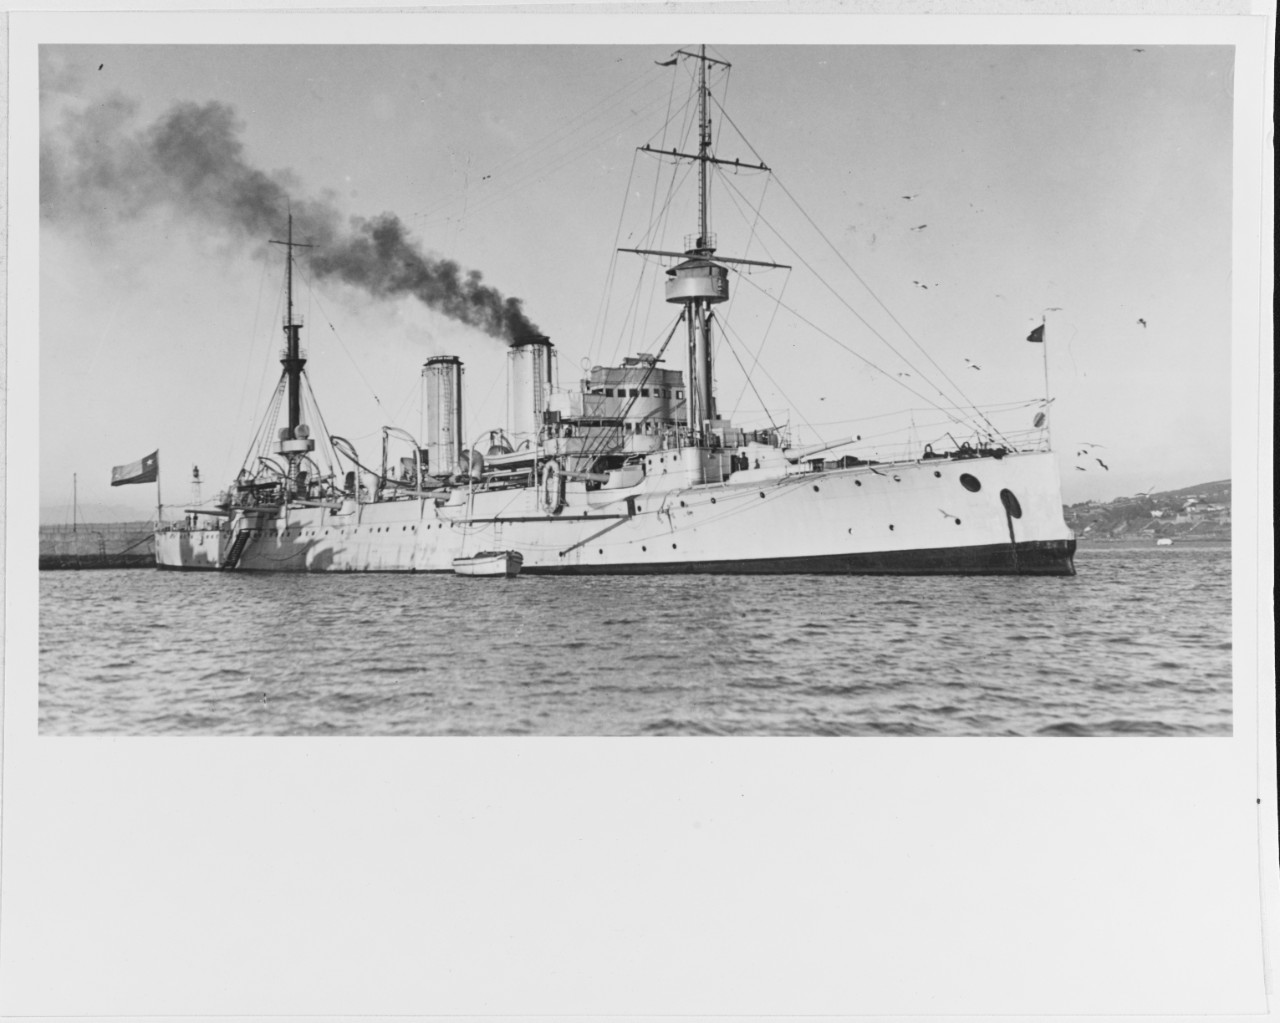 BLANCO ENCALADA (Chilean cruiser, 1893)